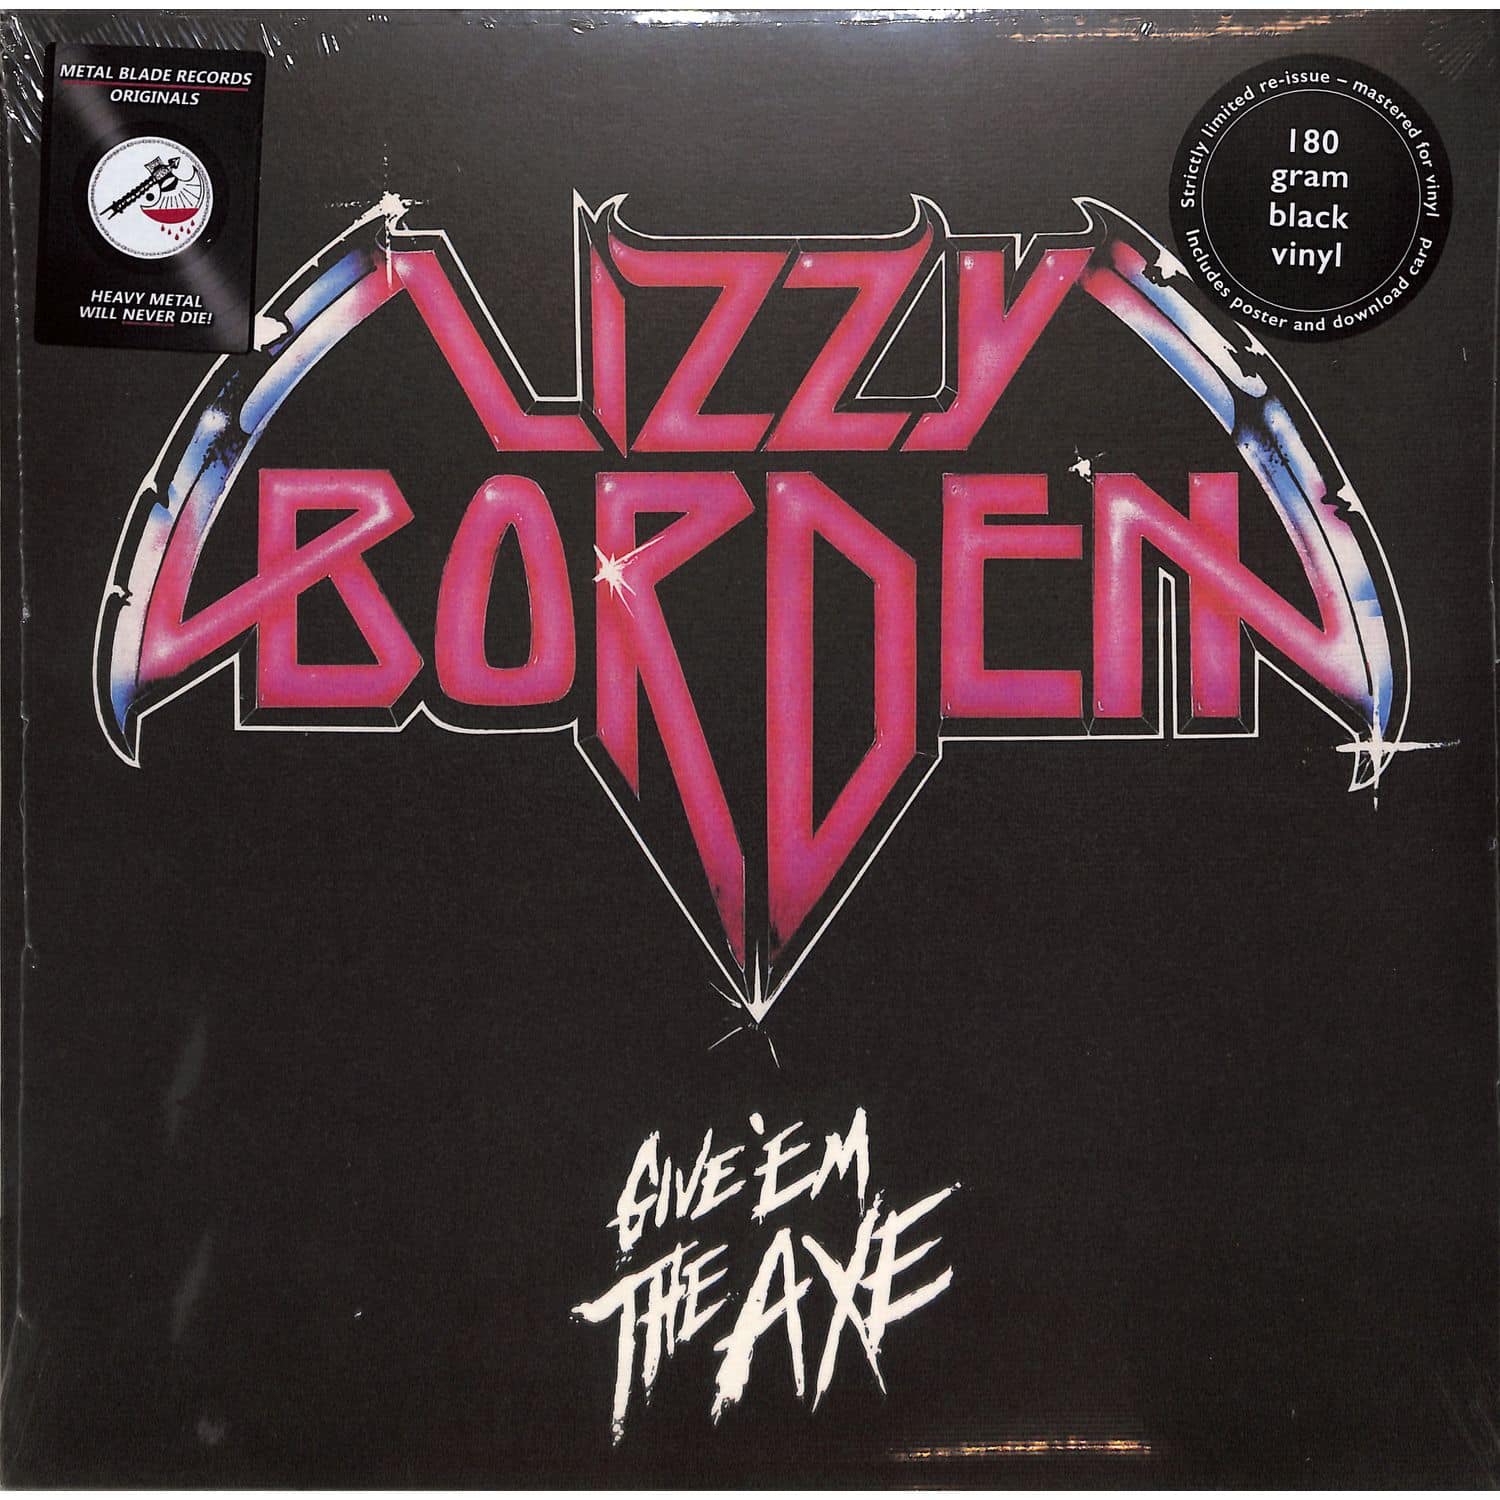 Lizzy Borden - GIVE EM THE AXE 